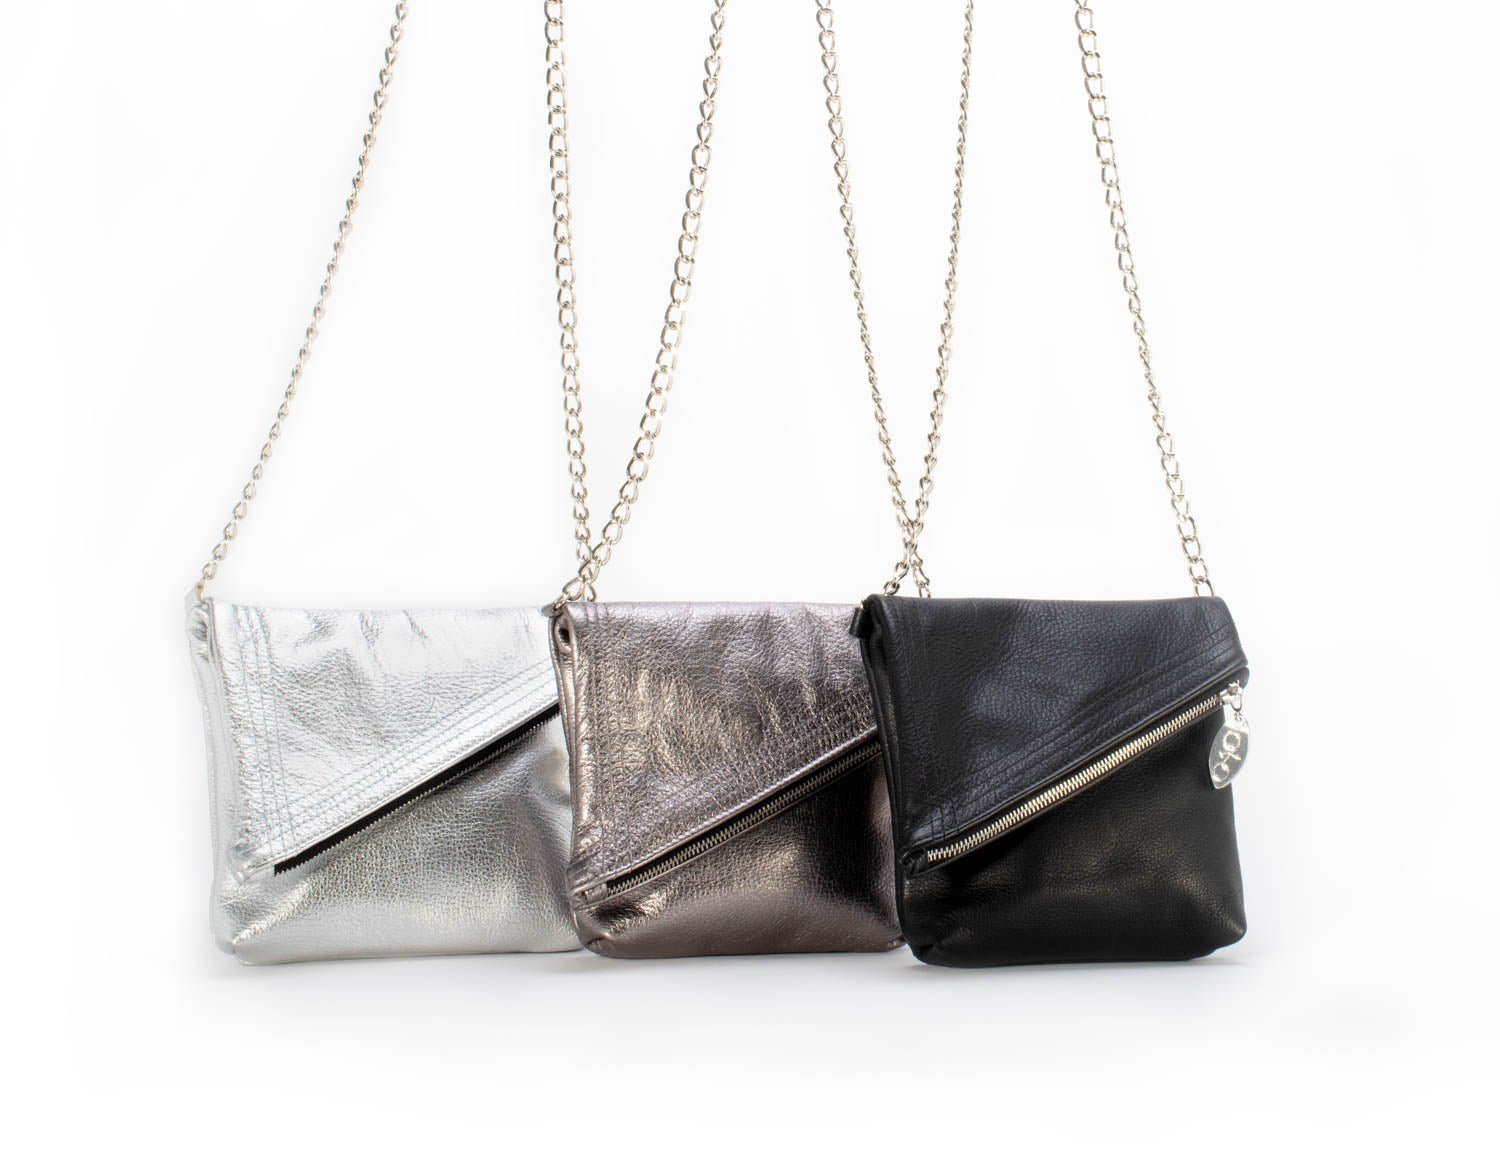 Shelley fold over bag-handmade leather bags-handcrafted leather-unique design bag-luxury leather bag-stylish bag-OKOhandbags